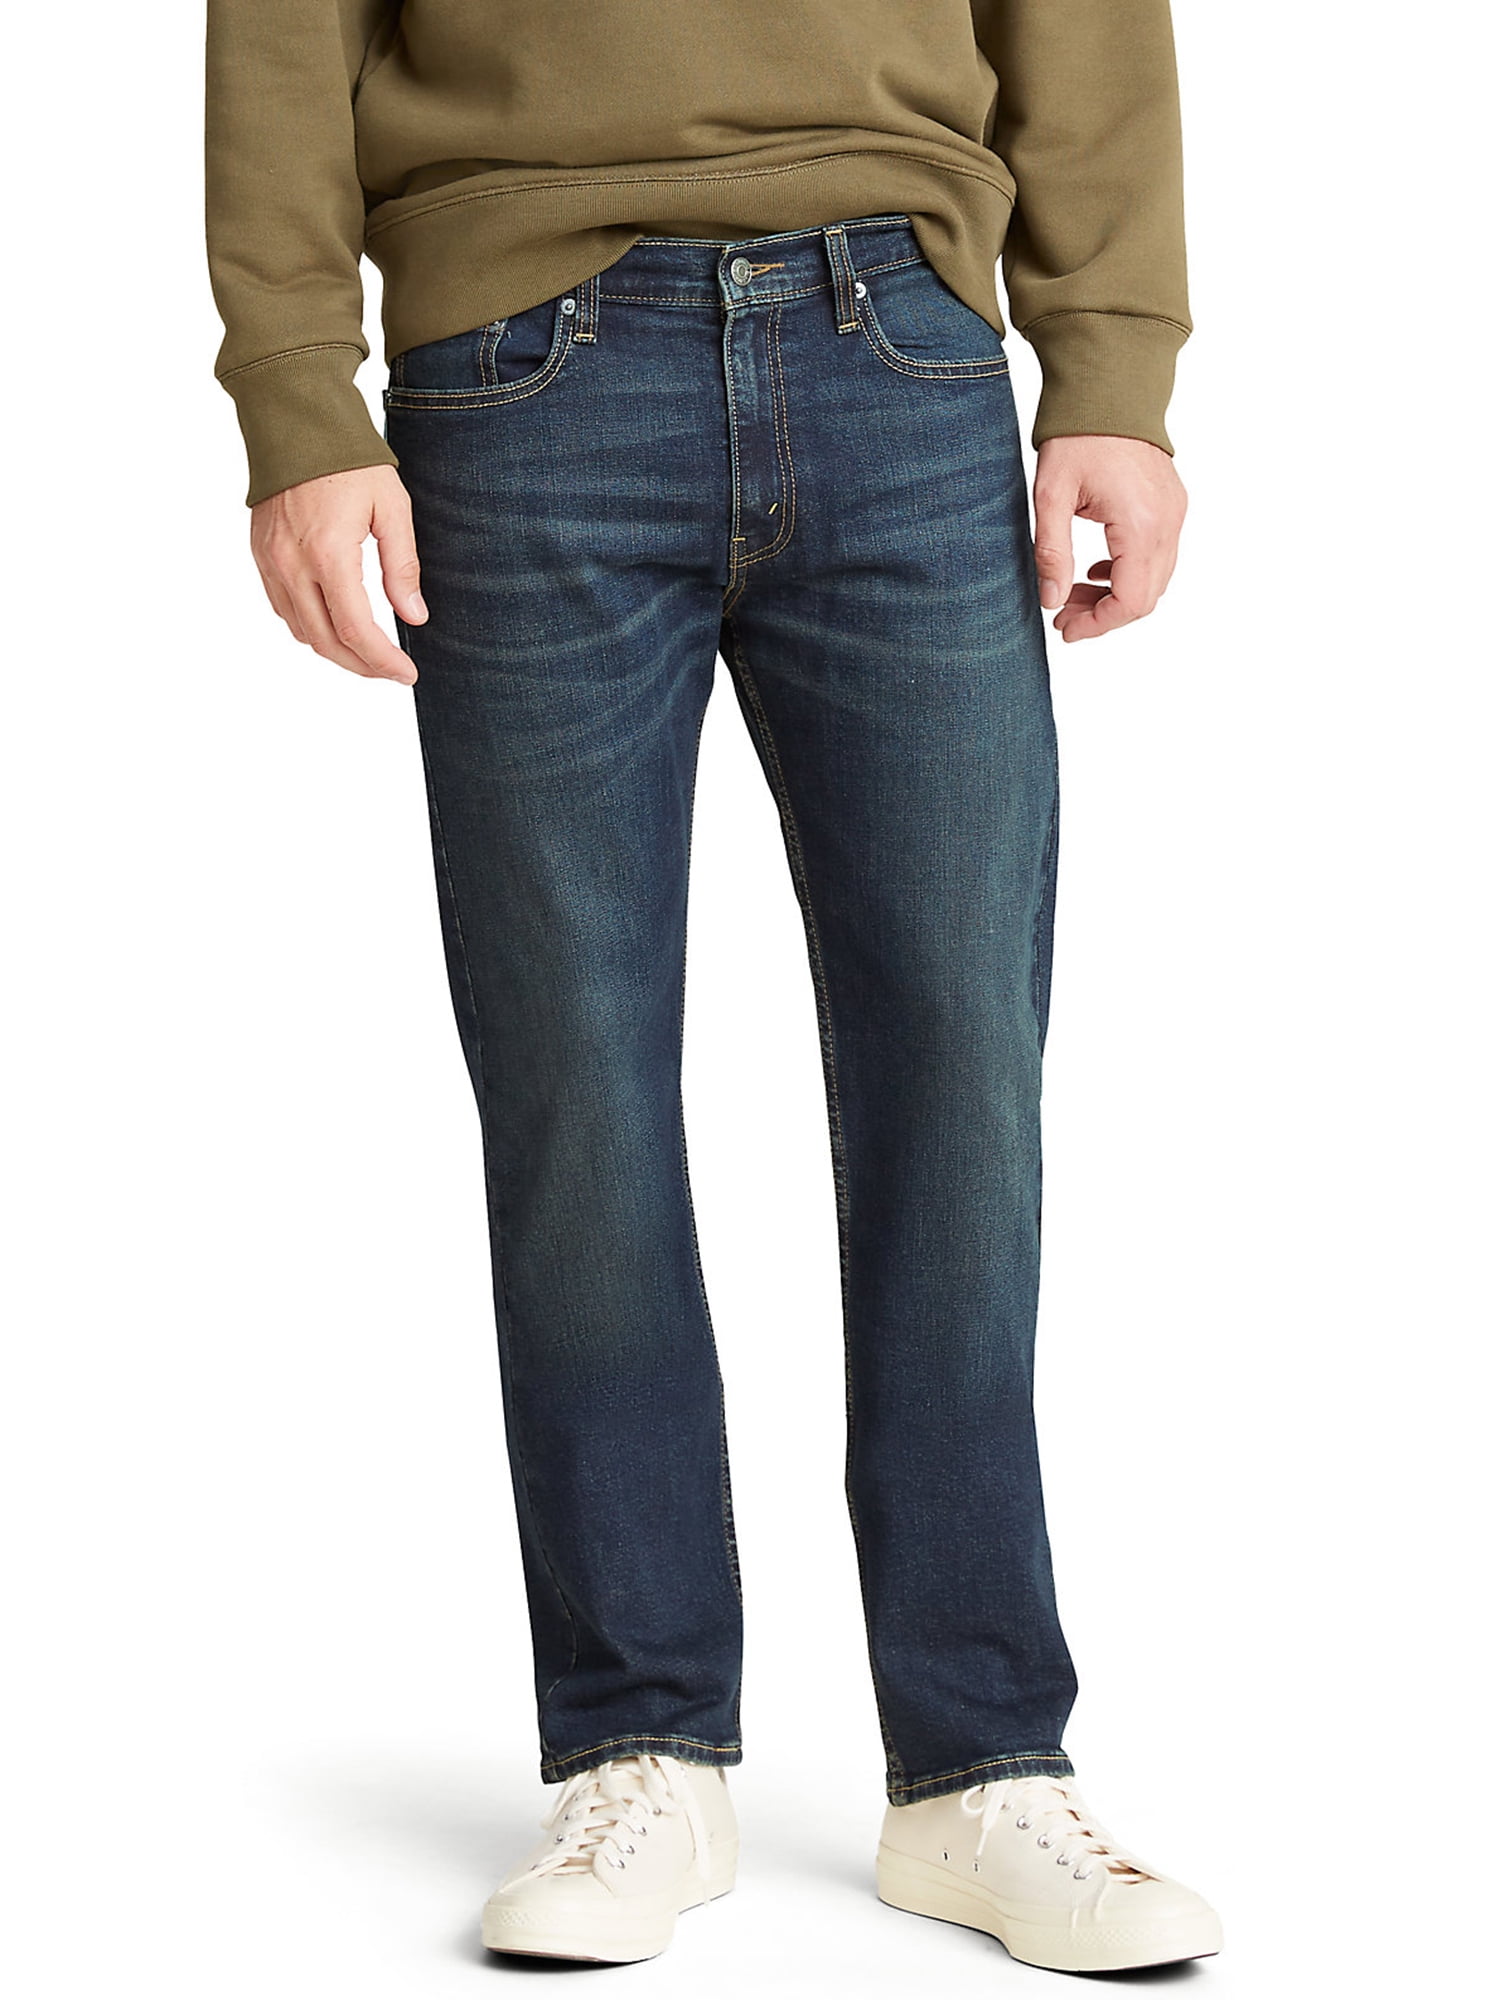 Buy Levi's Indigo Distressed Jeans for Men Online @ Tata CLiQ